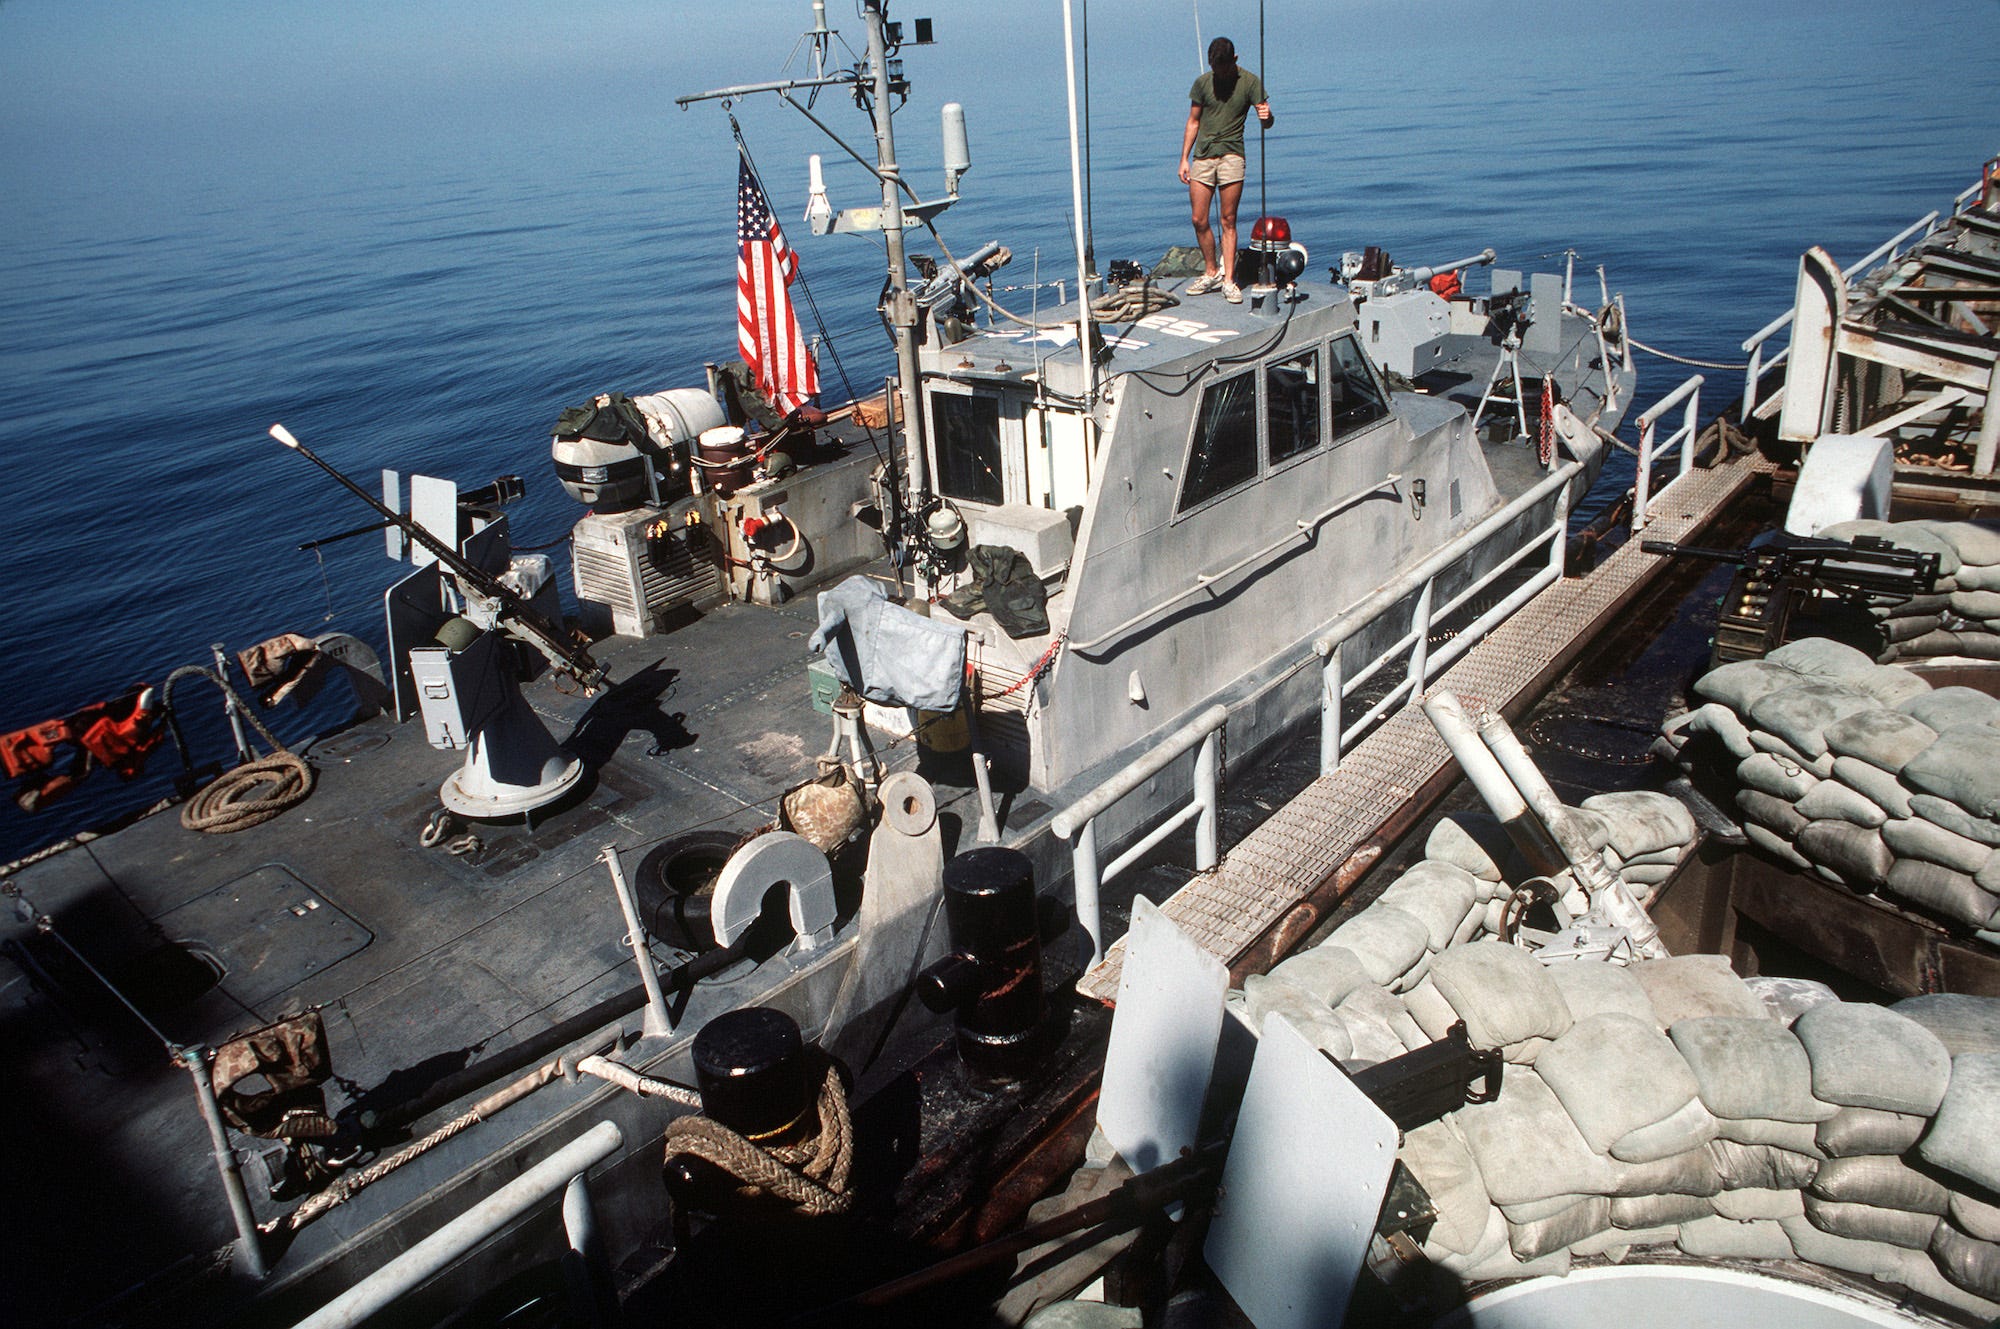 Navy PB Mark III patrol boat in Persian Gulf